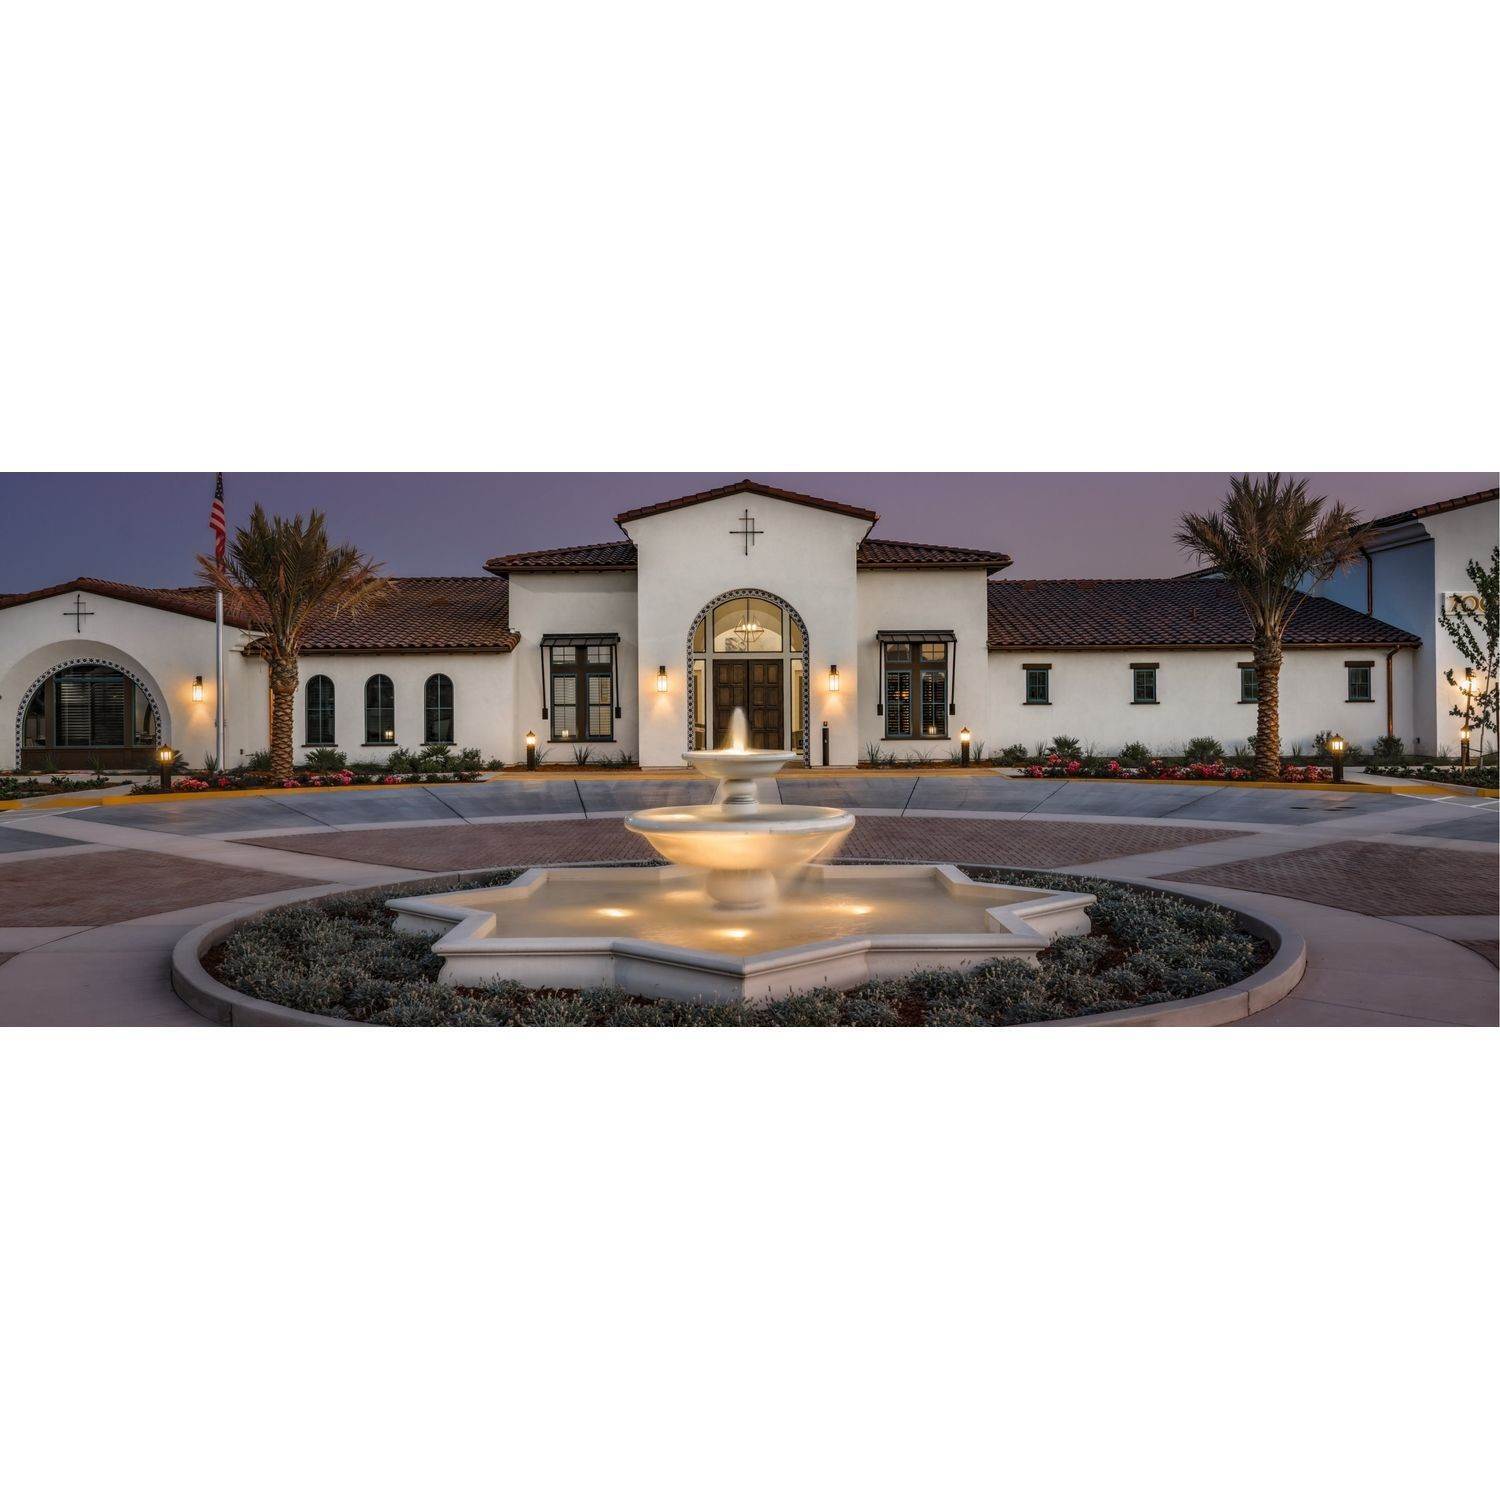 14. Mosaic Active Adult 55+ edificio en 4975 Del Mar Drive, El Dorado Hills, CA 95762